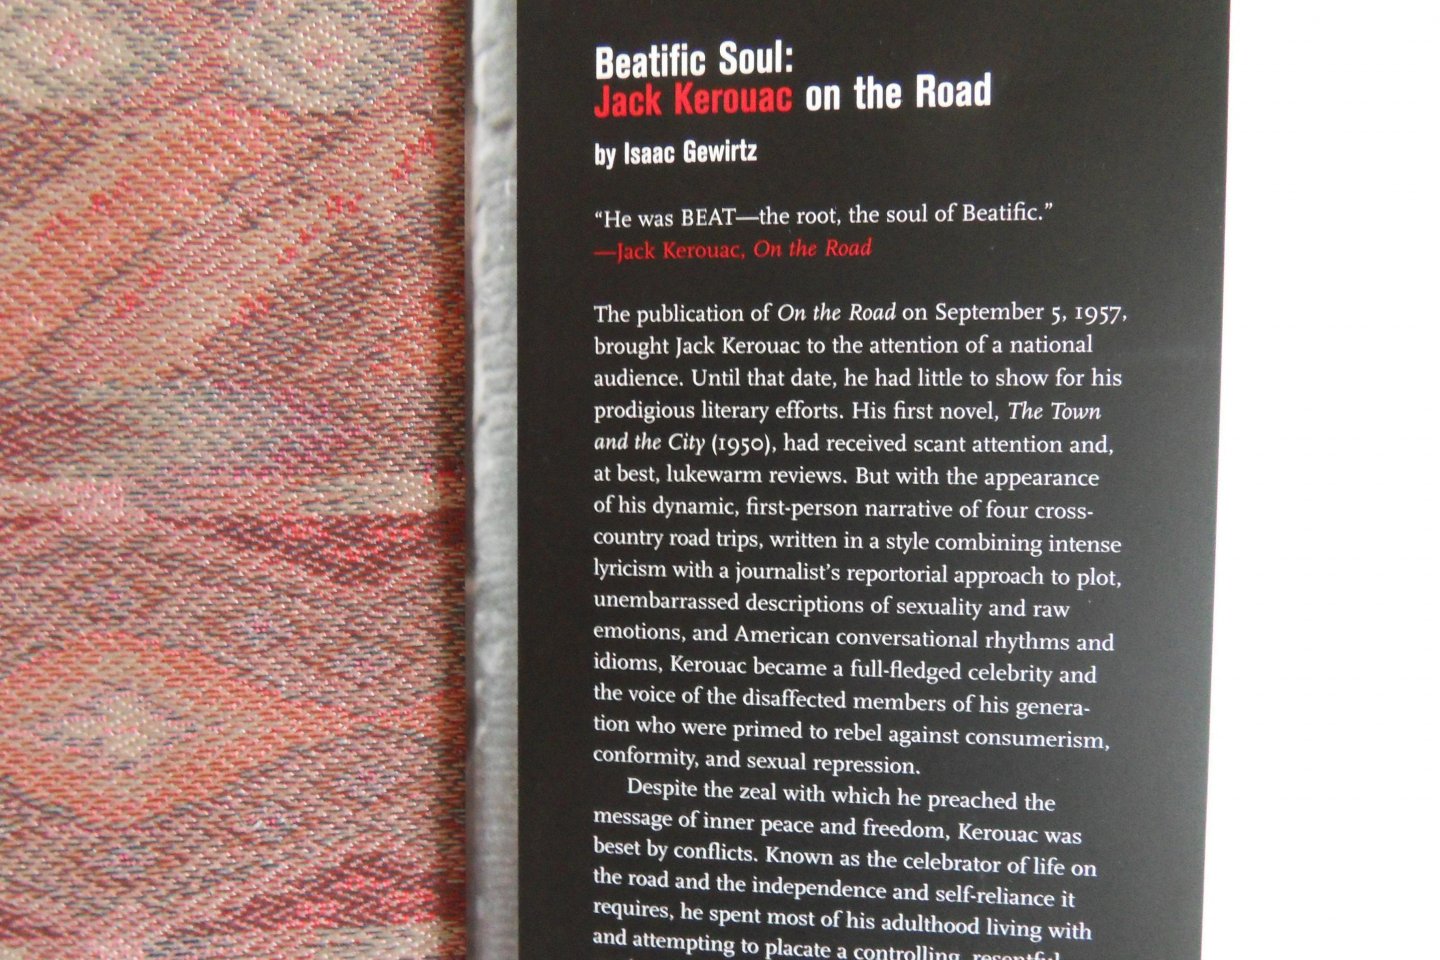 Gewirtz, Isaac. - Beatific Soul. - Jack Kerouac on the Road.